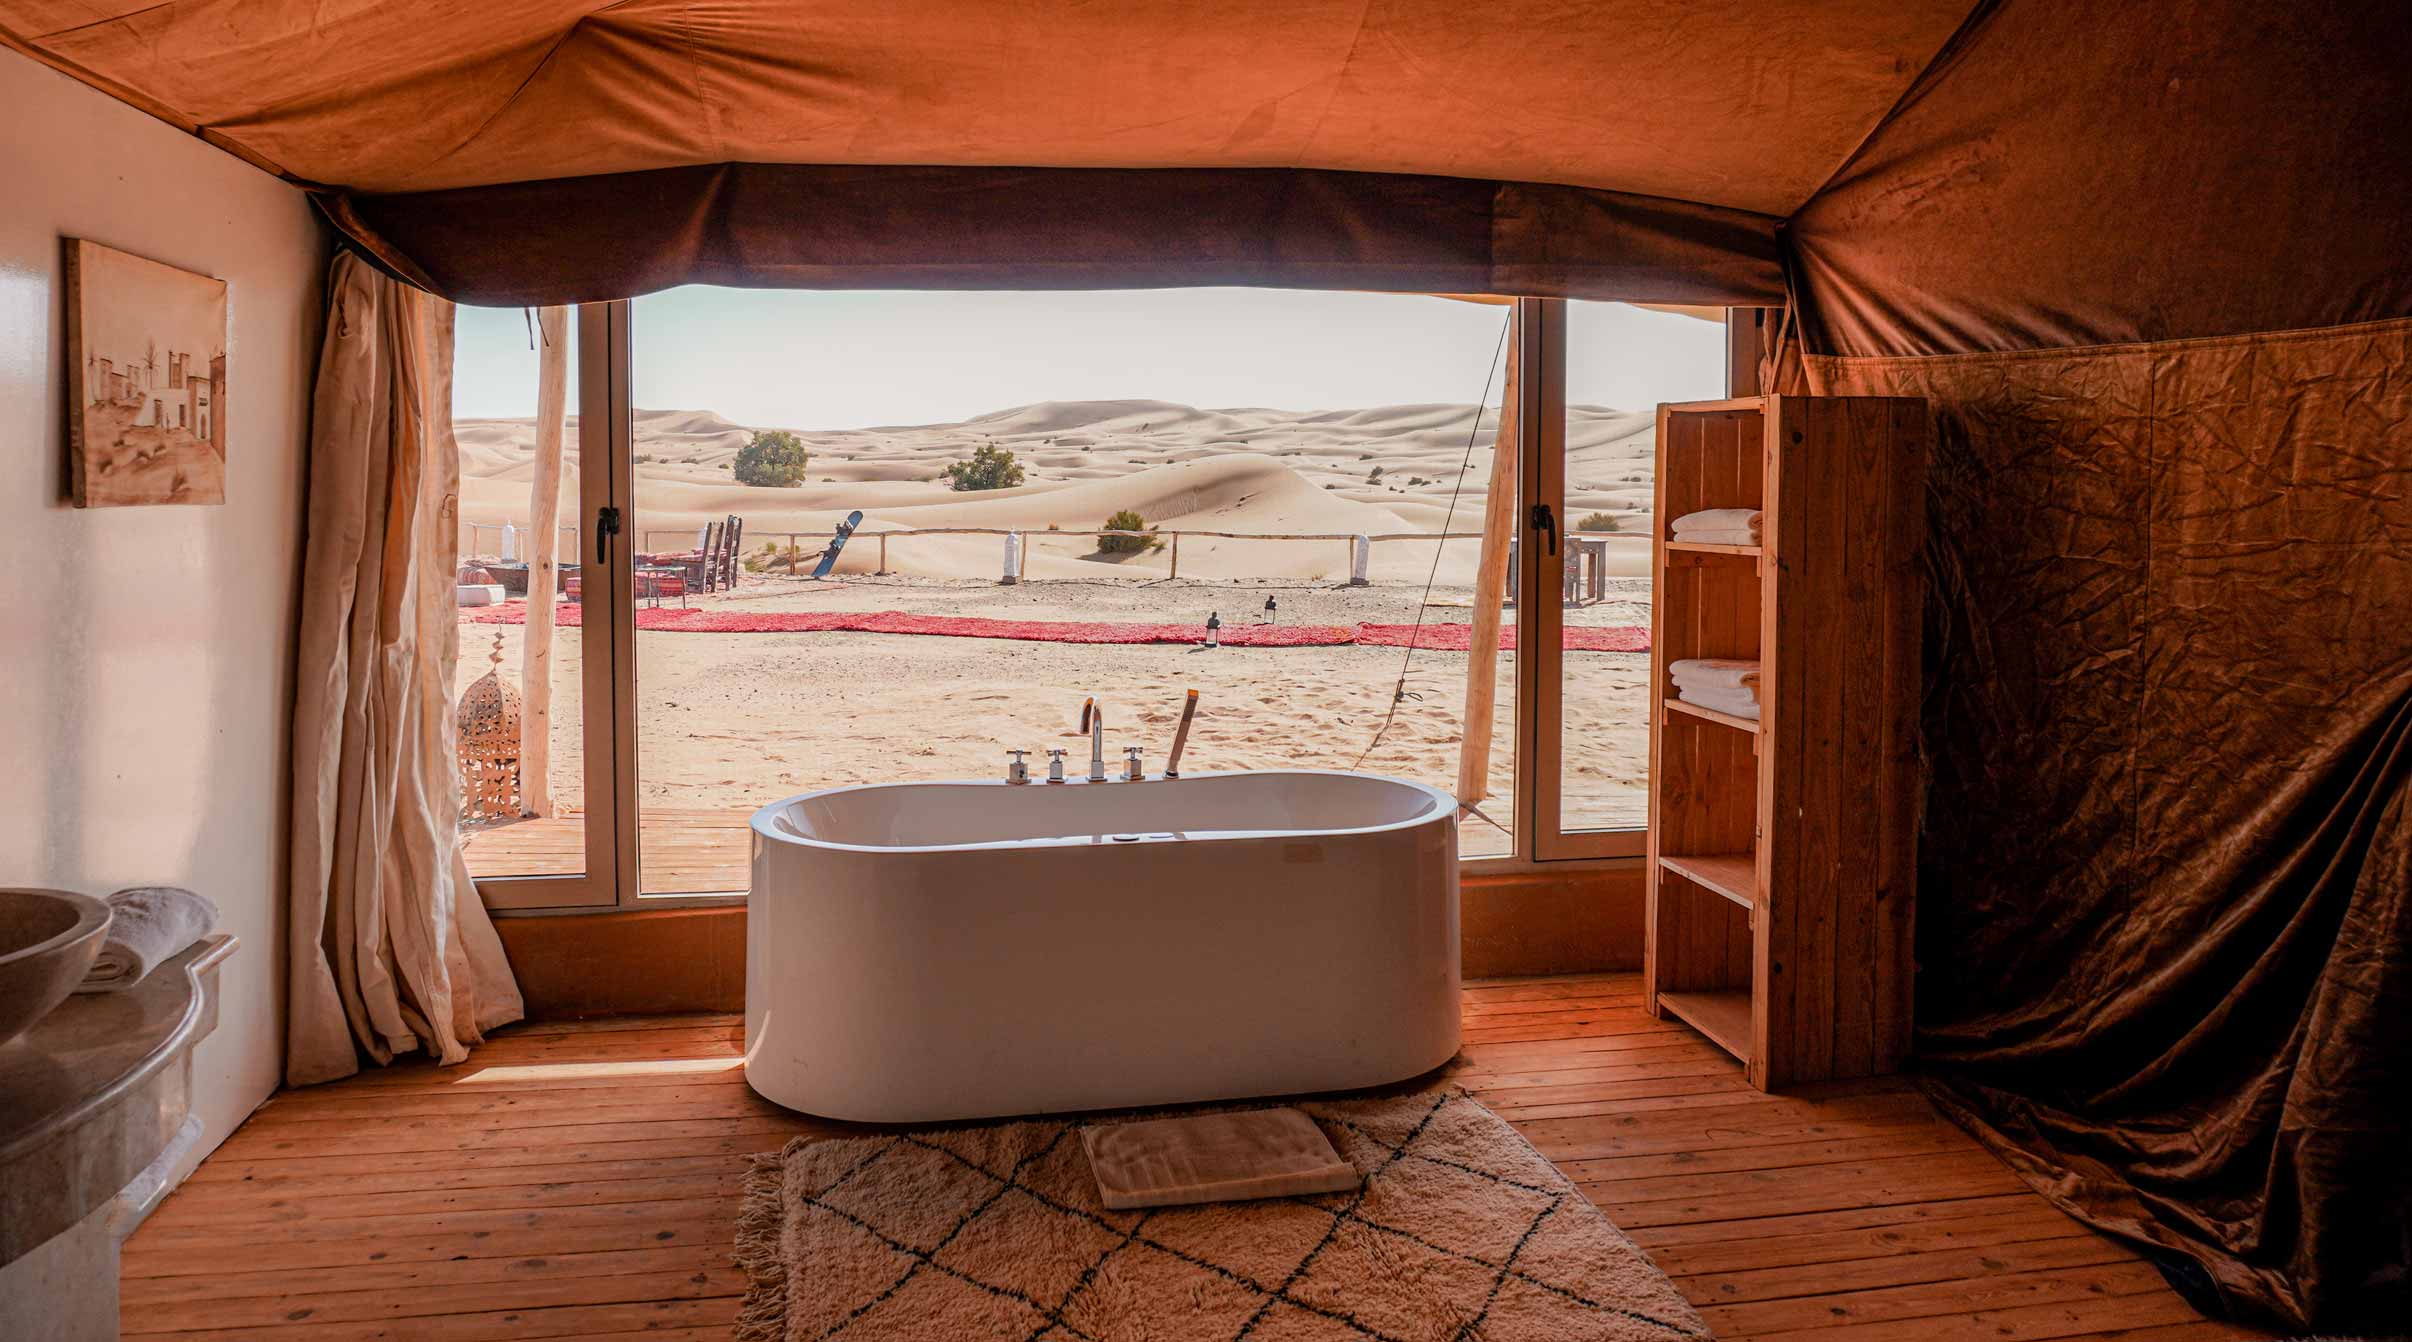 Bathtub in luxury desert camp in Morocco